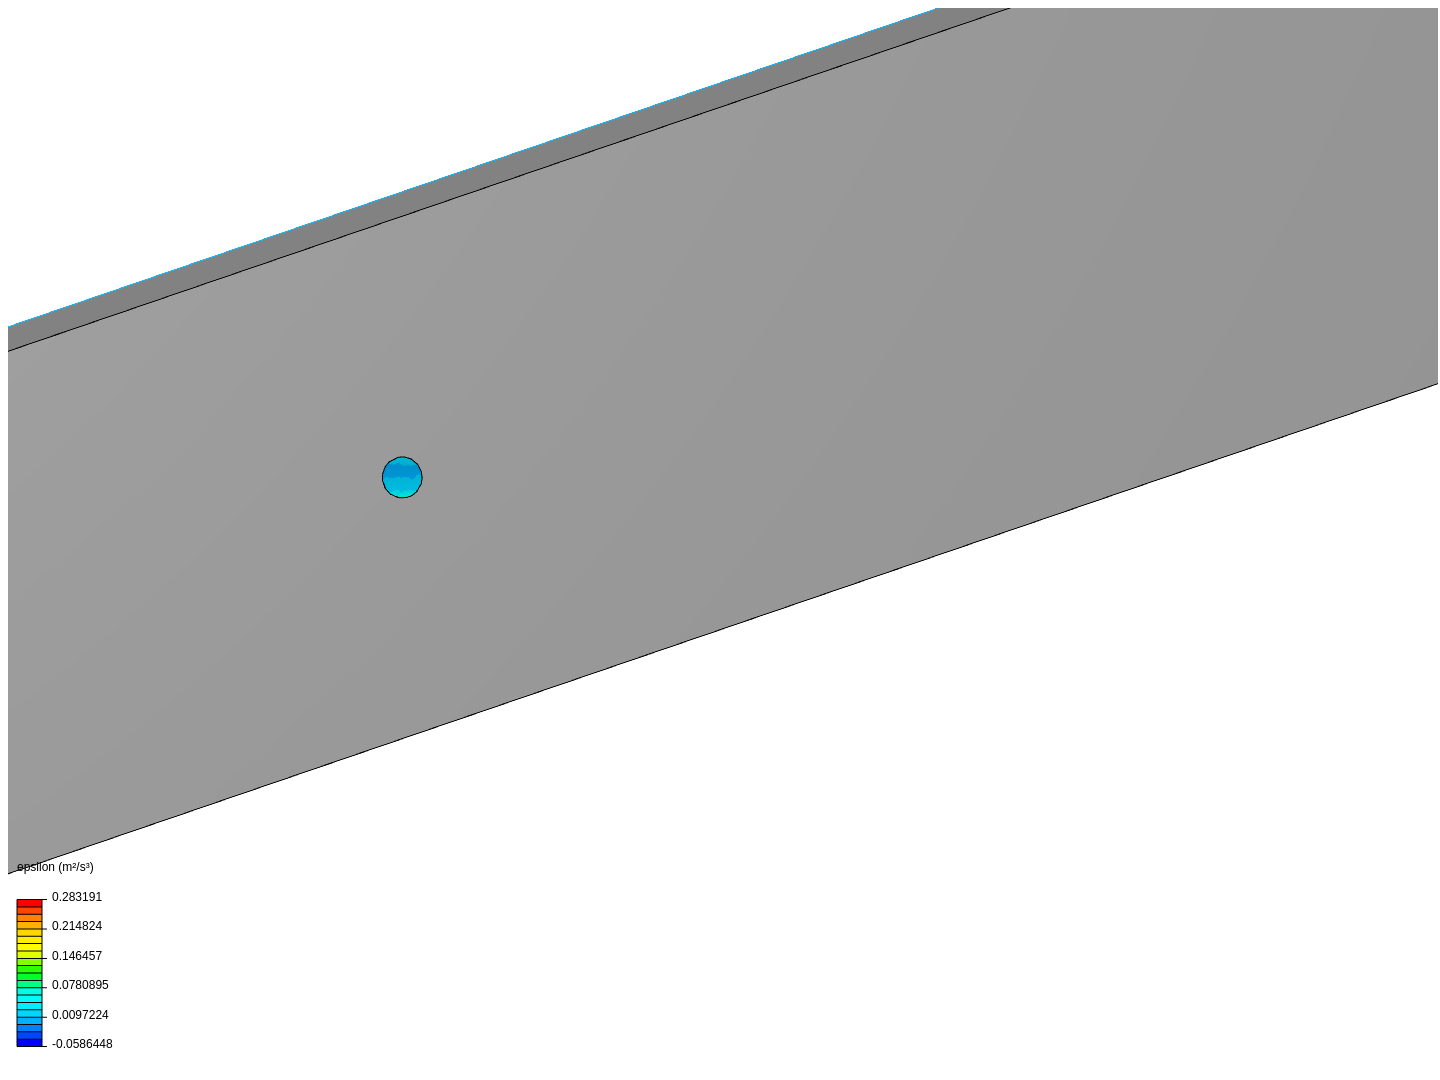 Unsteady flow around a circular cylinder image